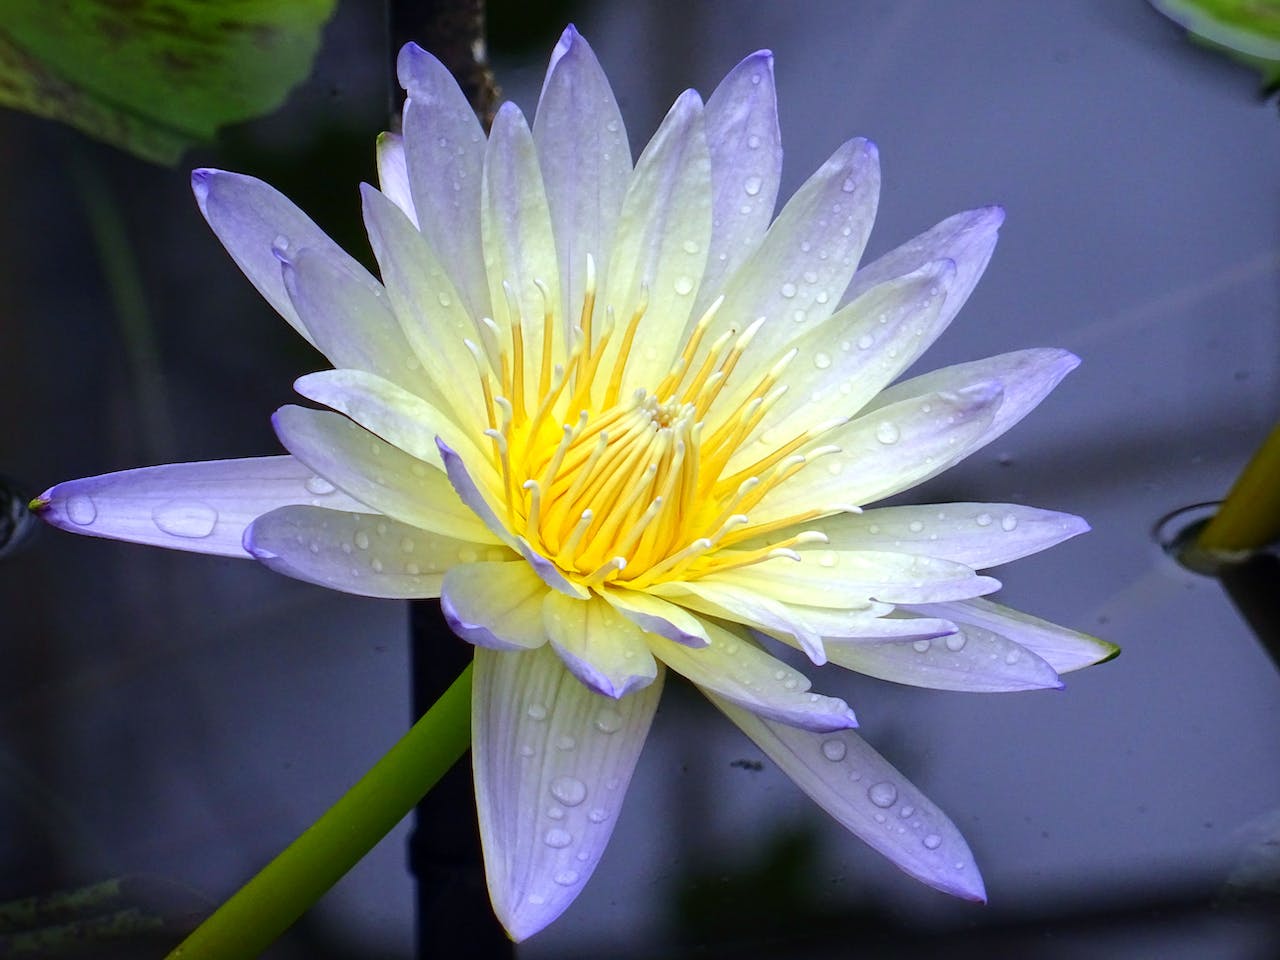 Blauer Lotus - Wirkung – Canasups